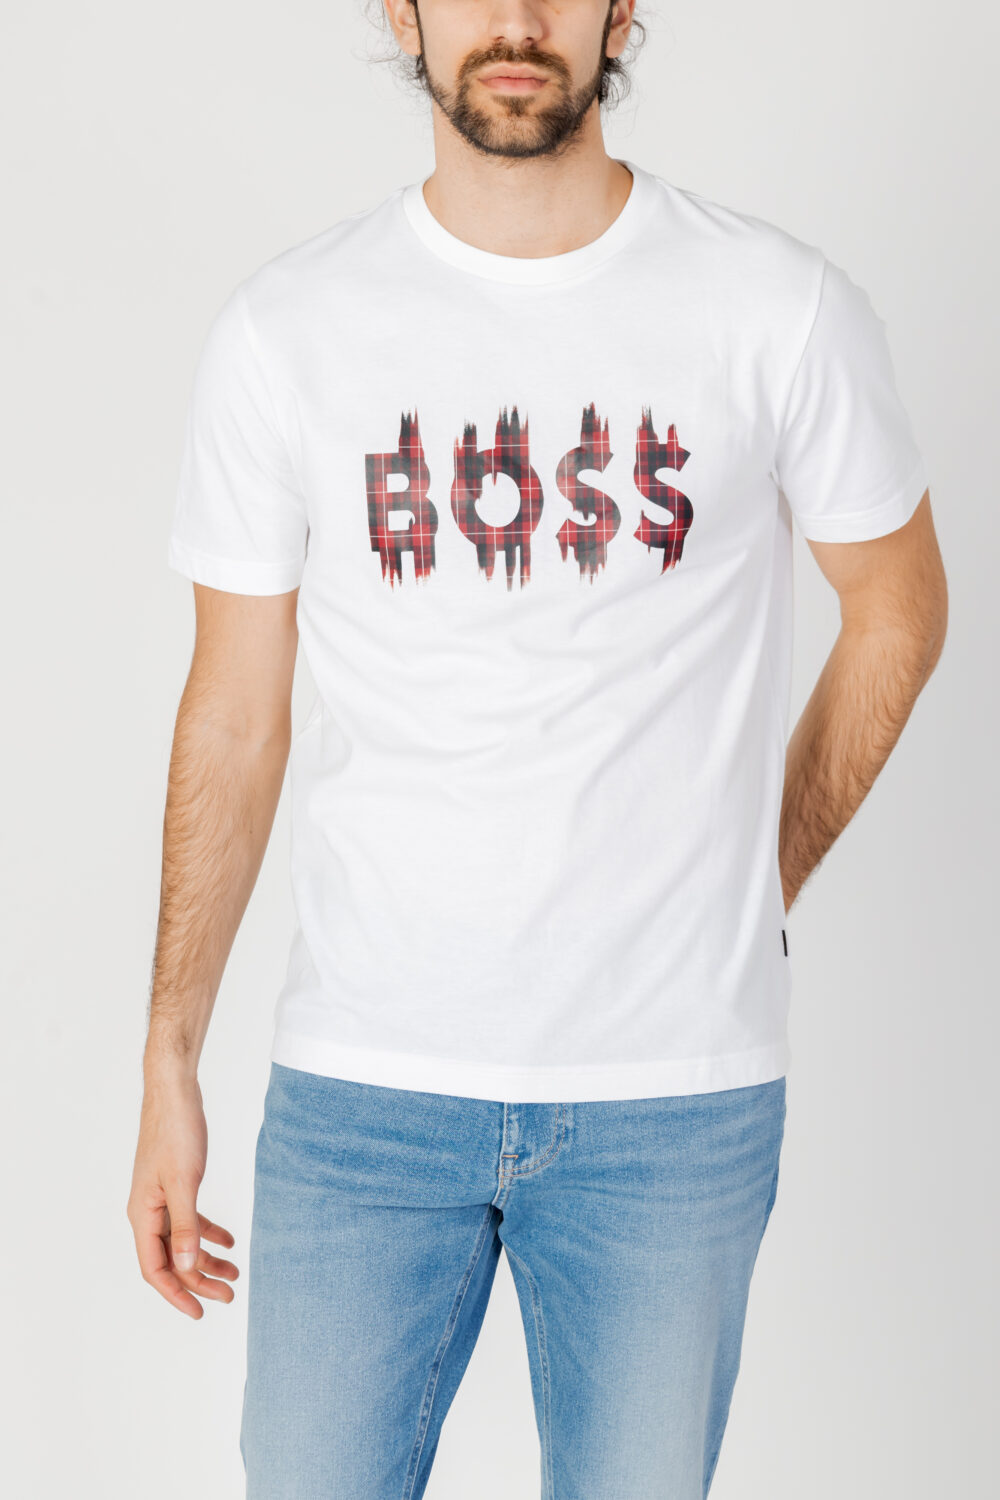 T-shirt Boss Teeheavyboss 10254276 01 Bianco - Foto 1